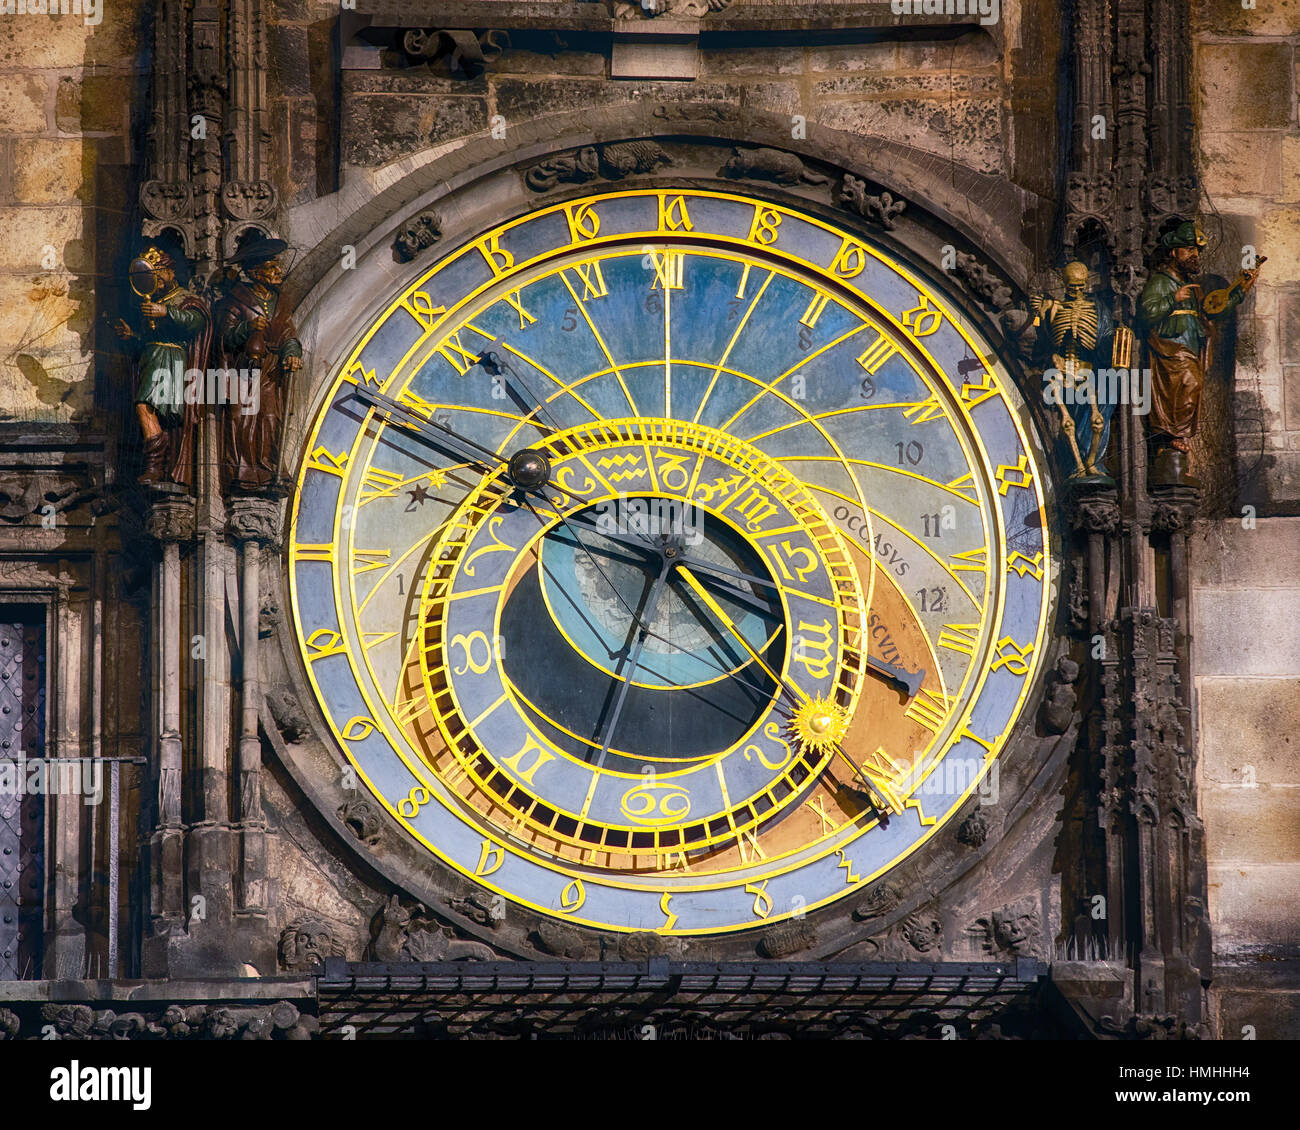 Close Up View of the Prague astronomical clock, Czech Republic Stock Photo